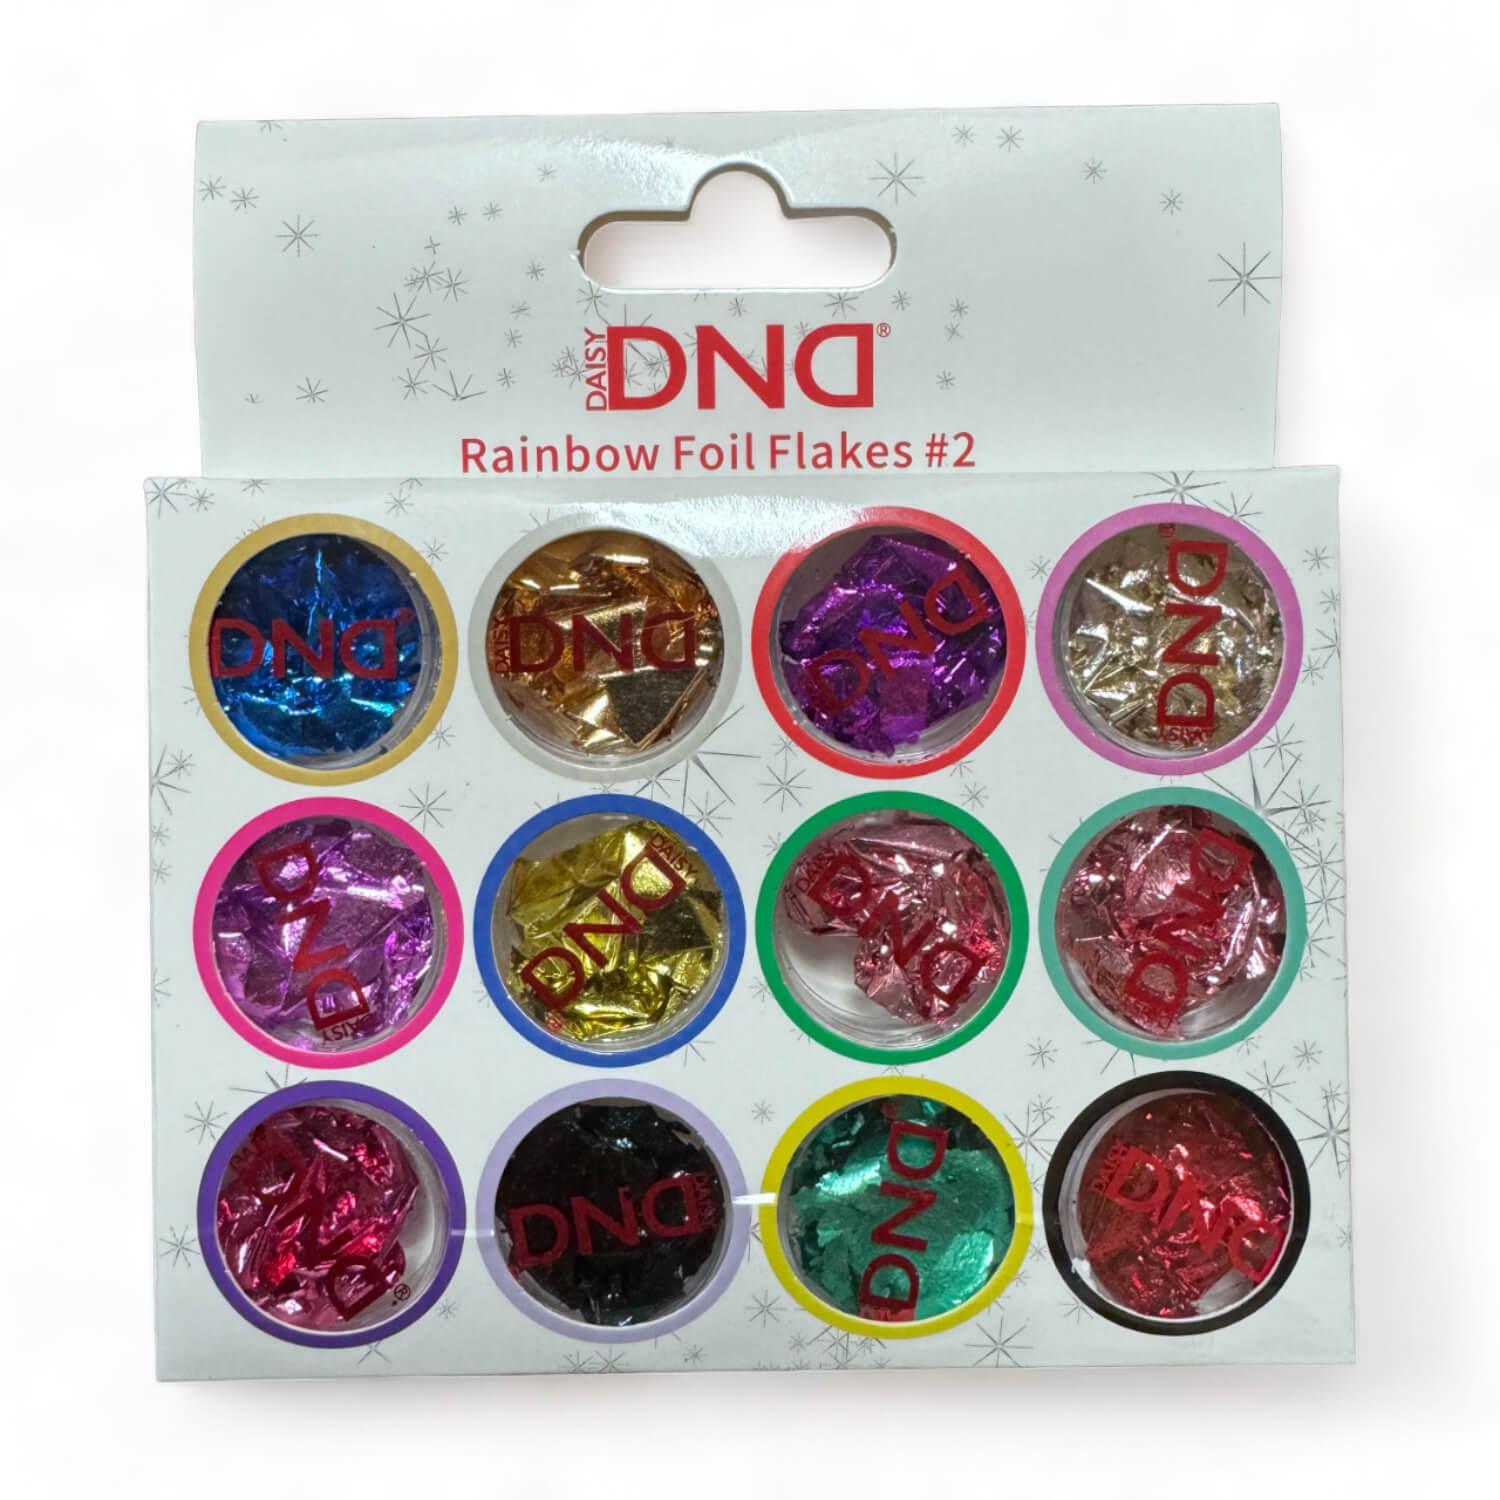 DND Rainbow Foil Flakes Nail Design #2